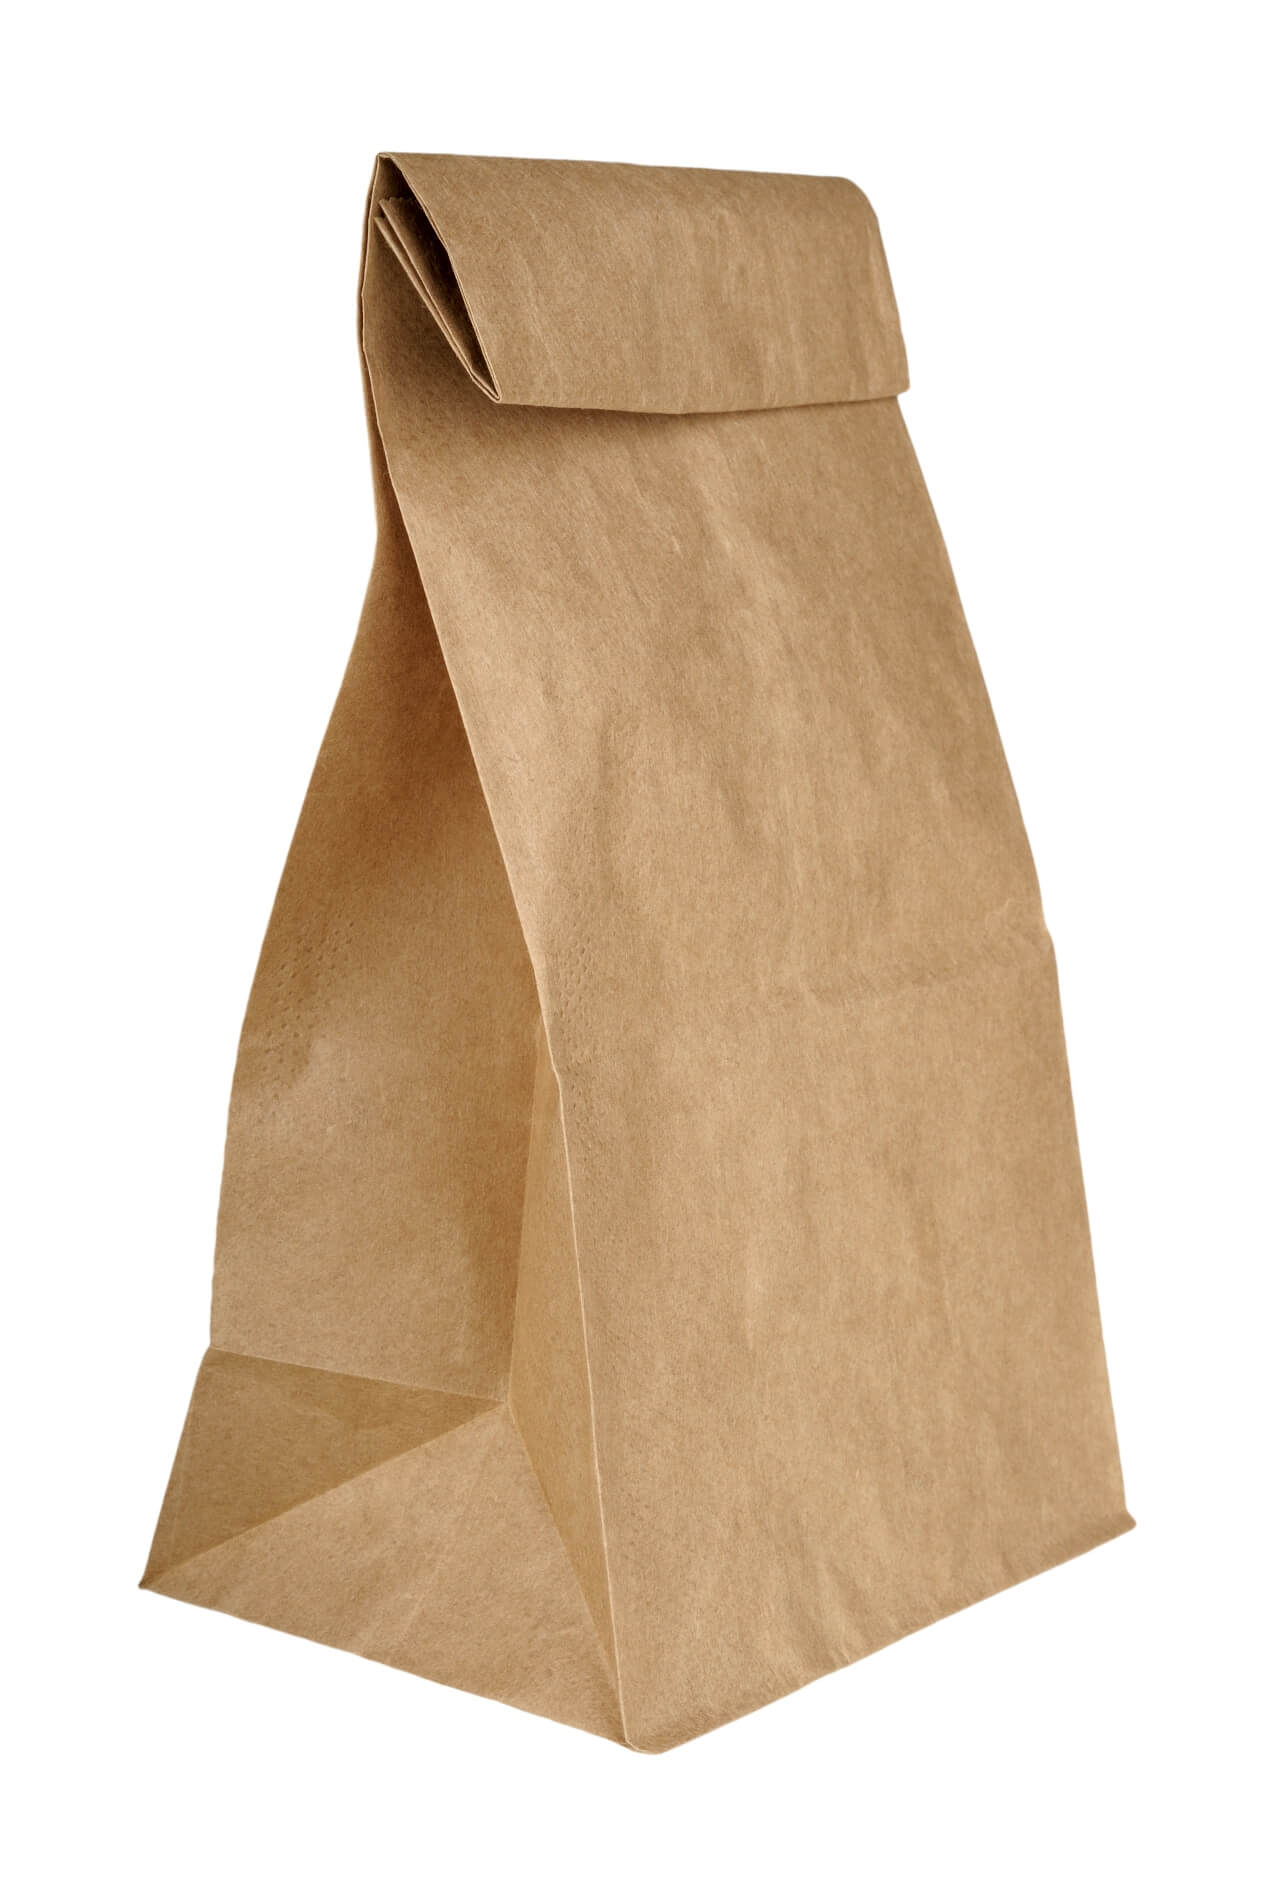 BacktoSchool Healthy Brown Bag Lunch Ideas